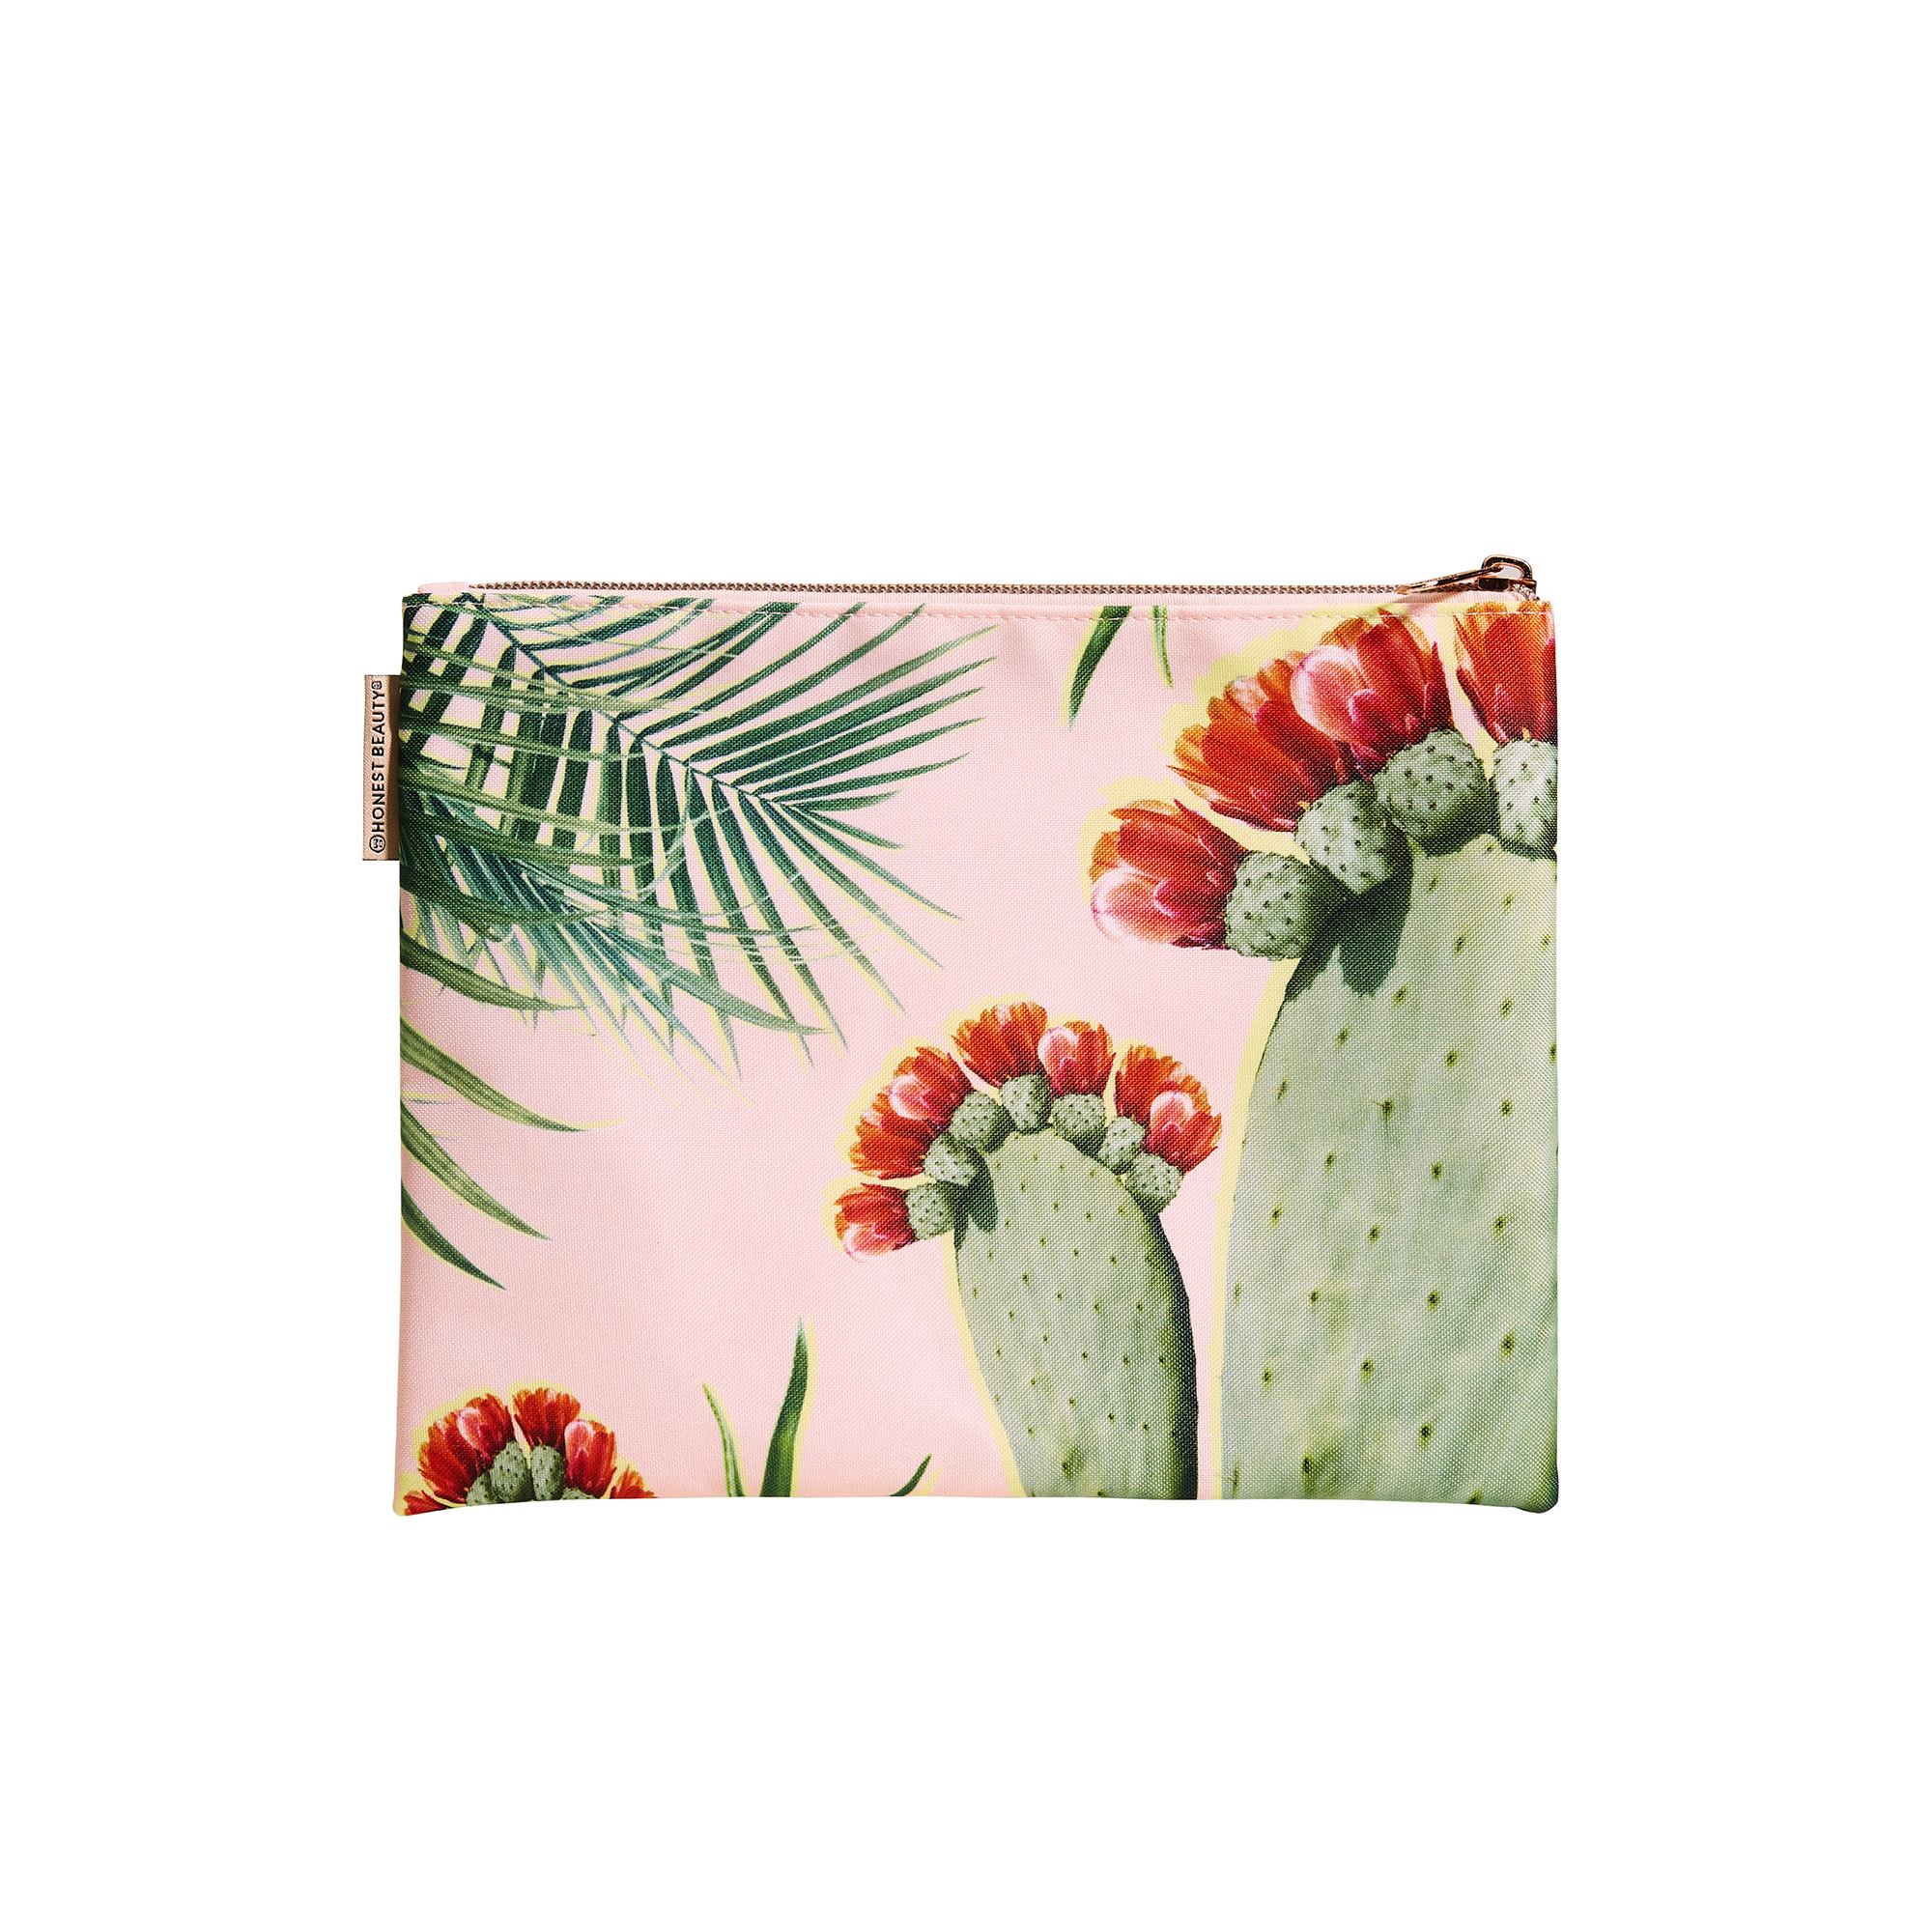 Honest Palm Print Beauty Bag, Medium